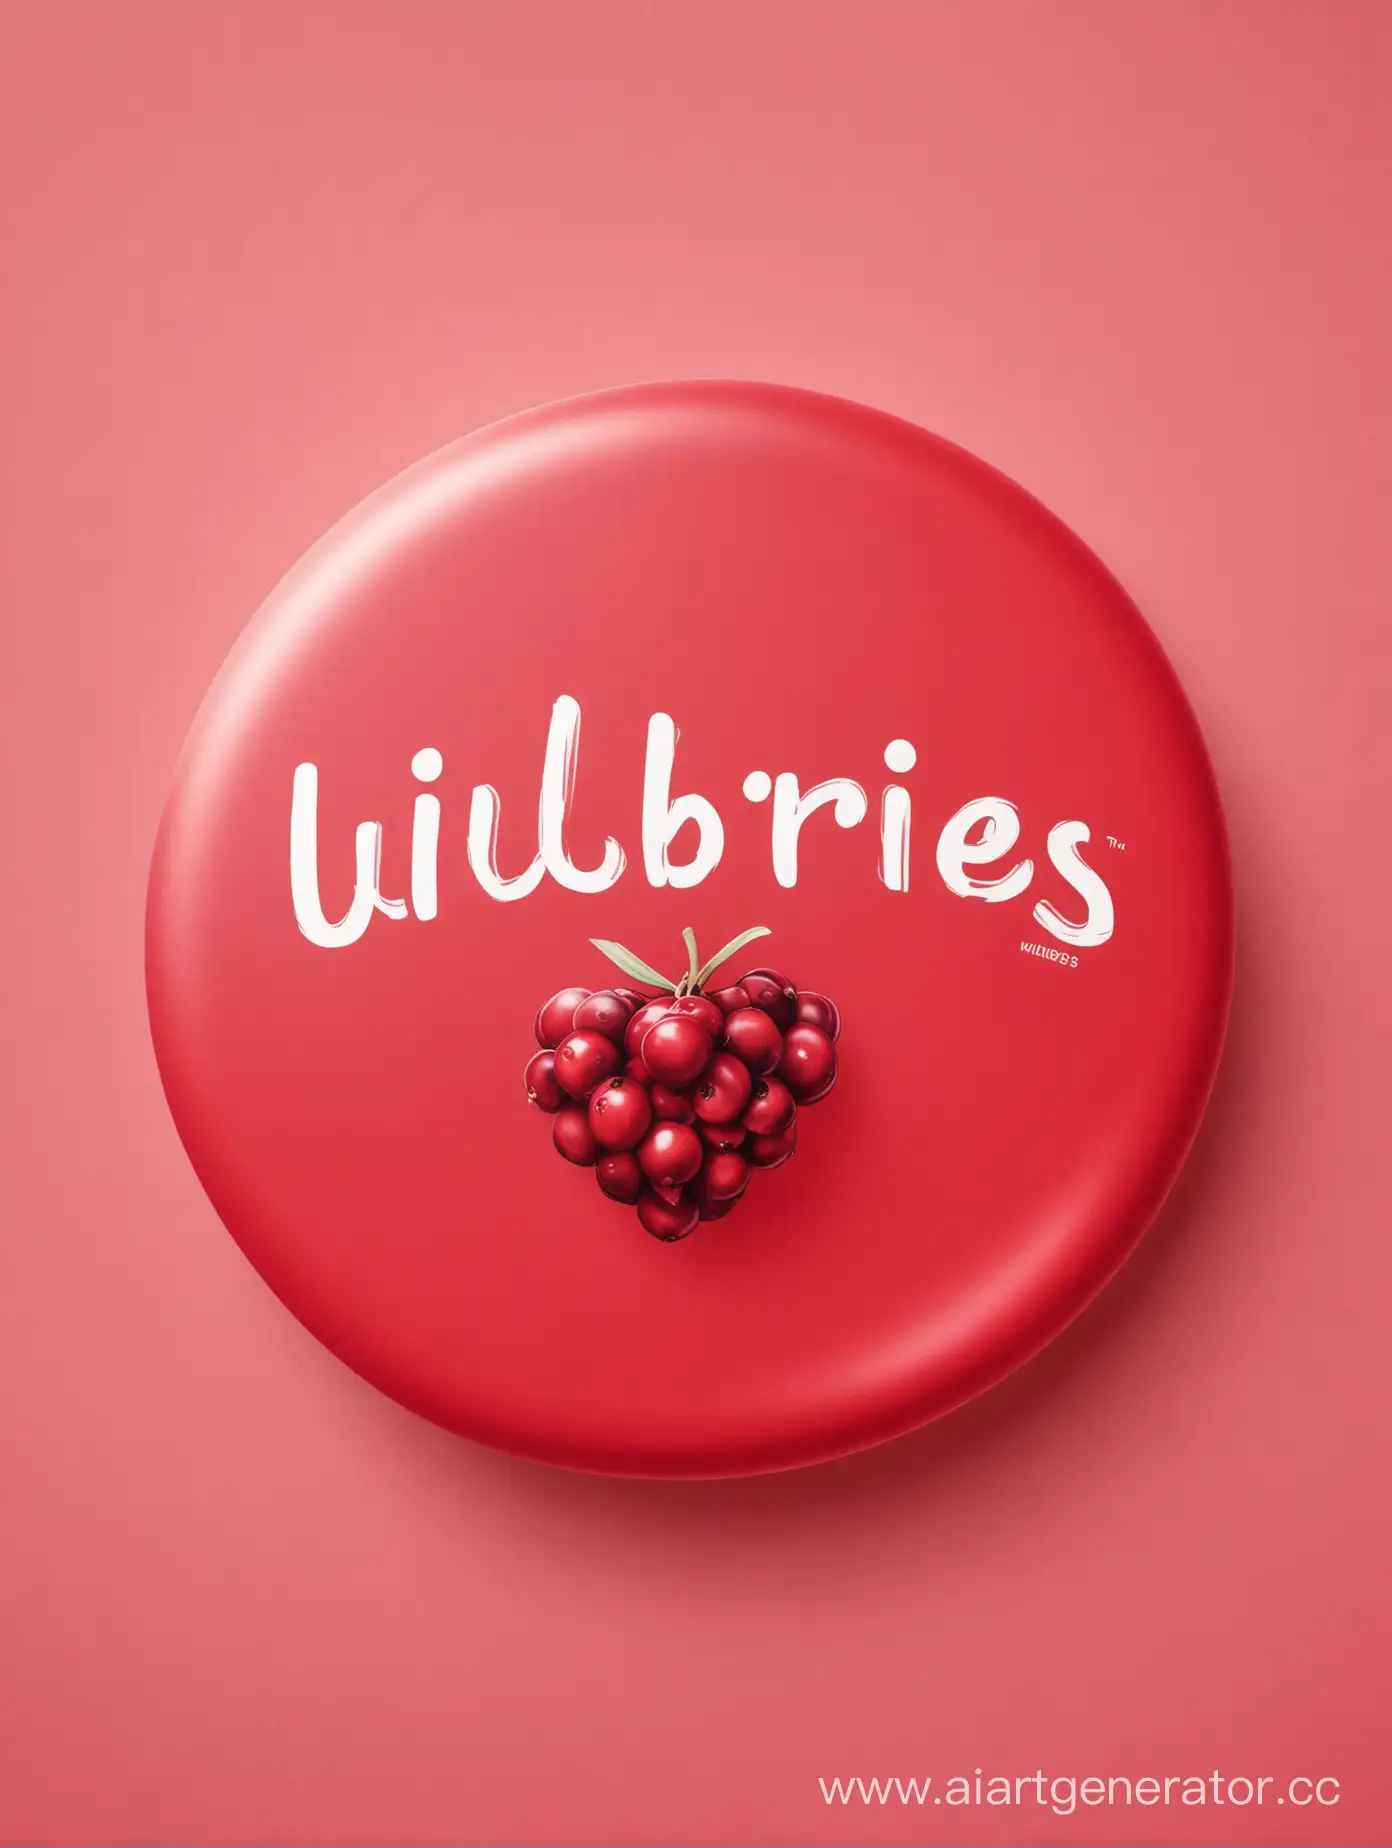 логотип wildberries, обьёмный, красный, кругрый, яркий